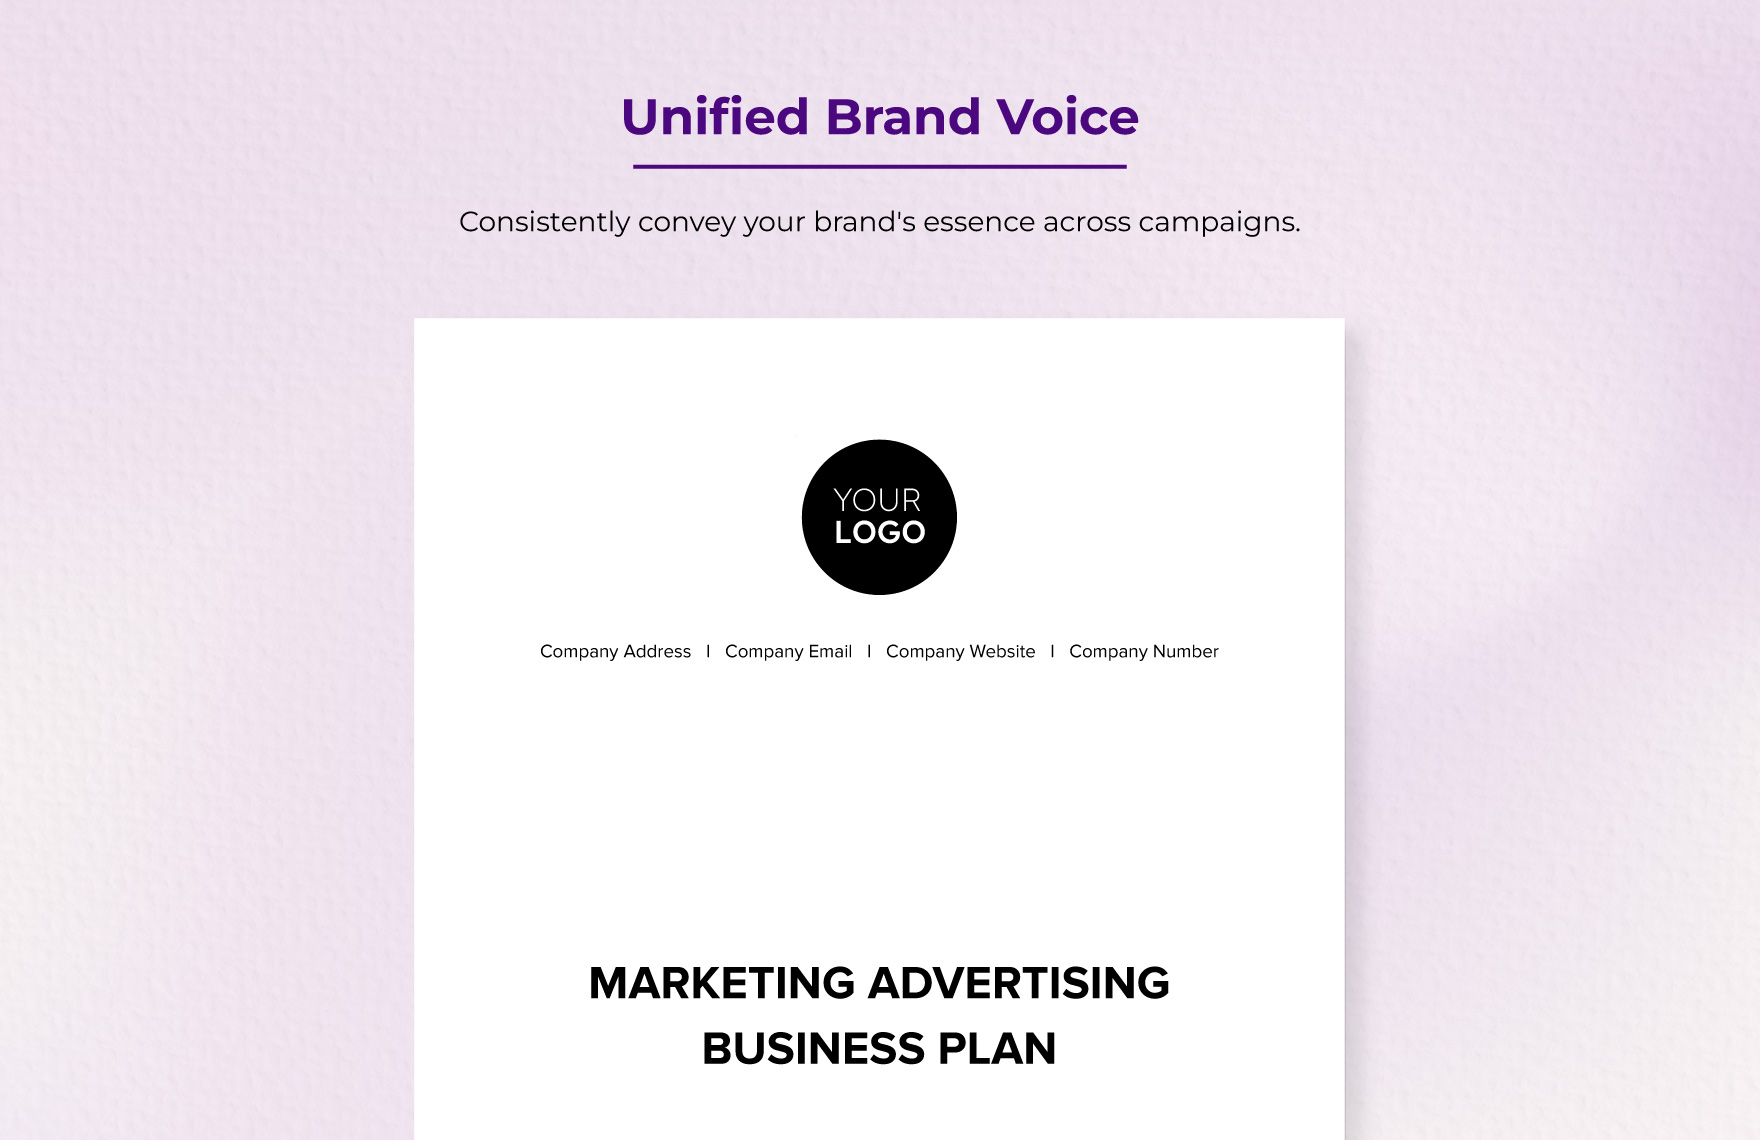 Marketing Advertising Business Plan Template